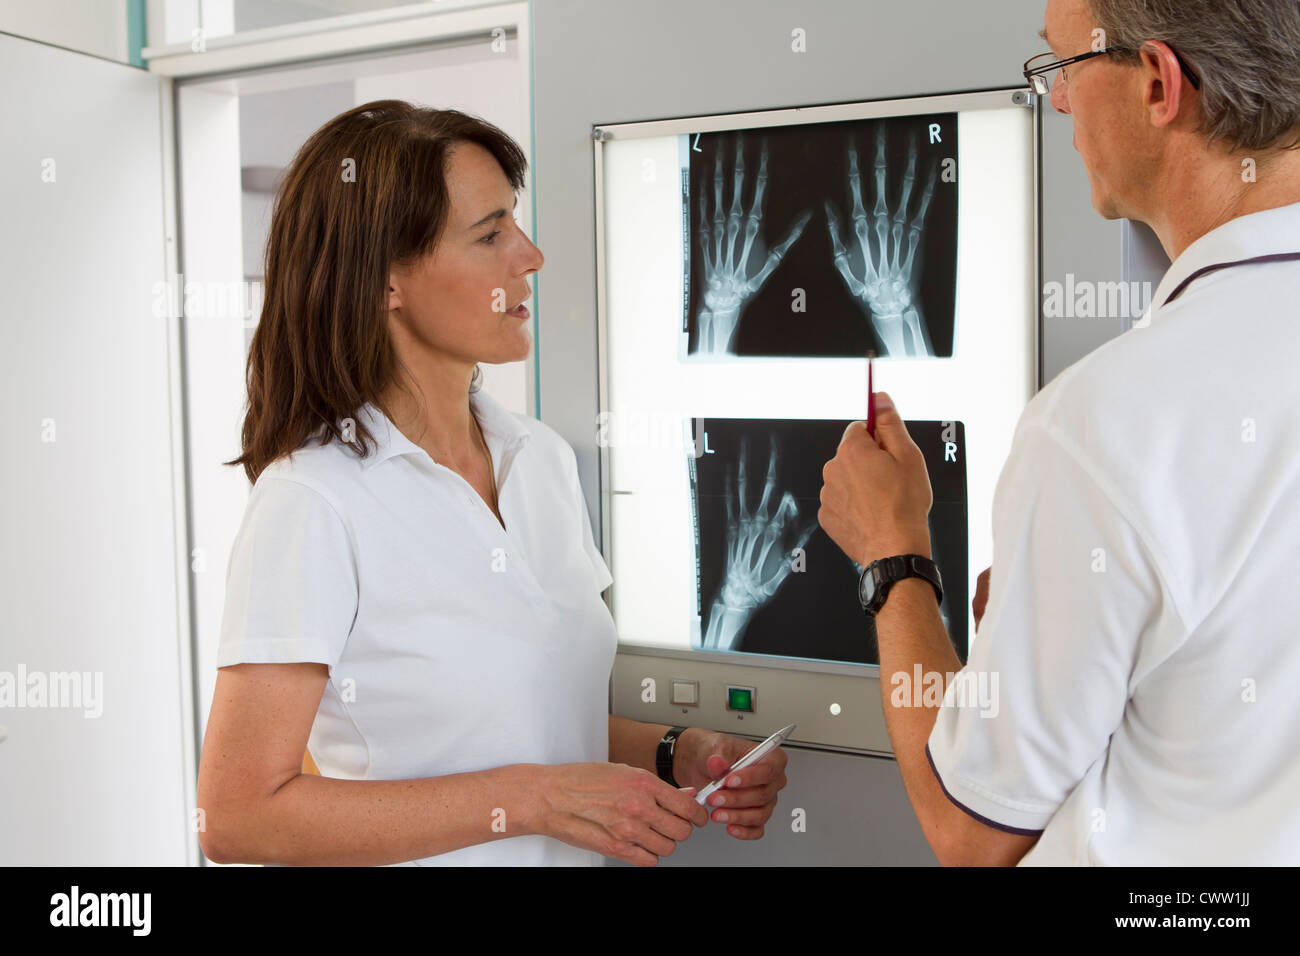 Doctor and nurse examining x-rays Stock Photo